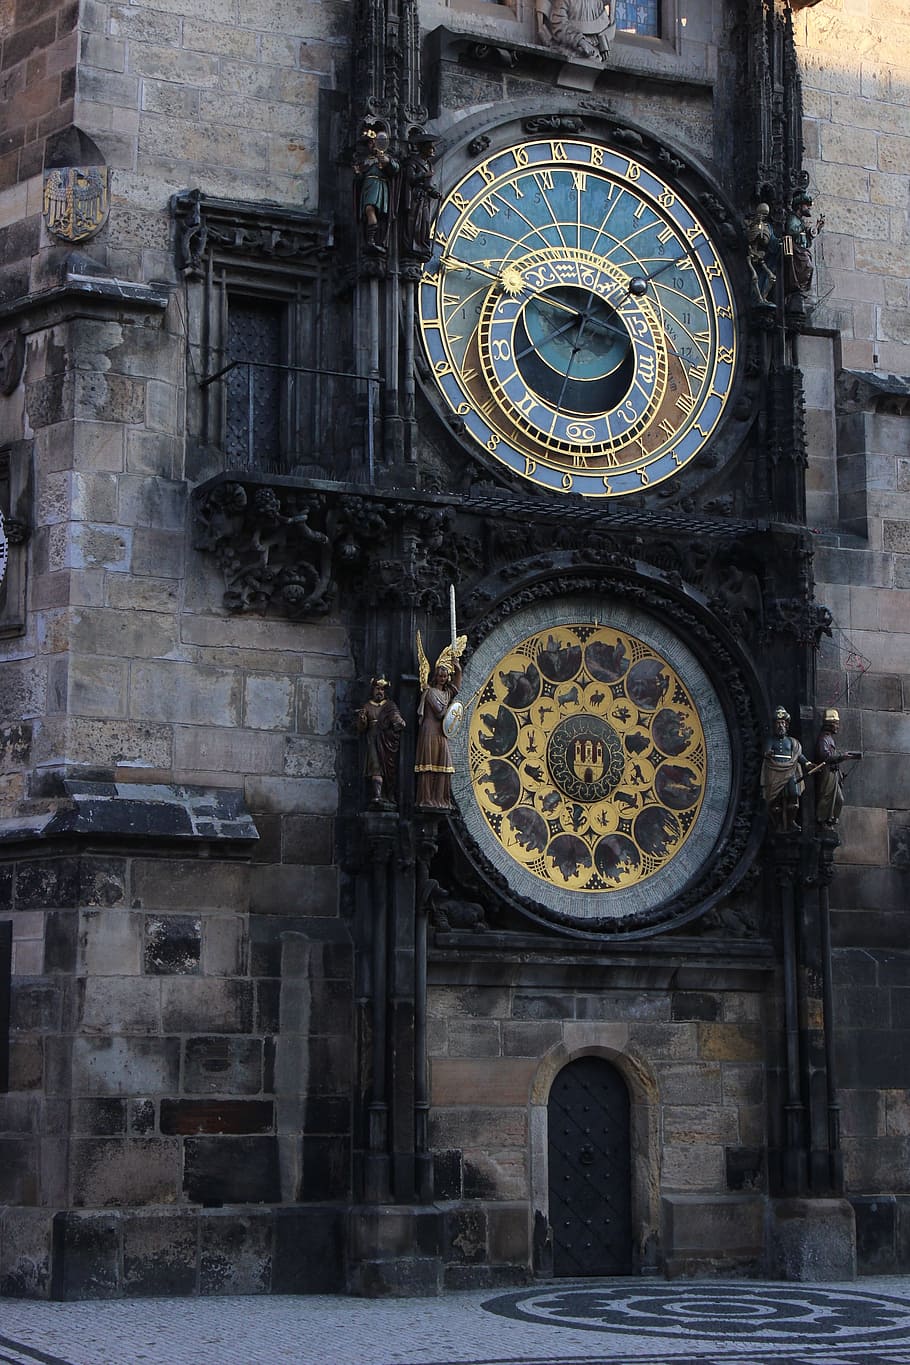 astronomical, clock, Prague, Astronomical Clock, the astronomical clock, old town hall, time, travel destinations, building exterior, ornate